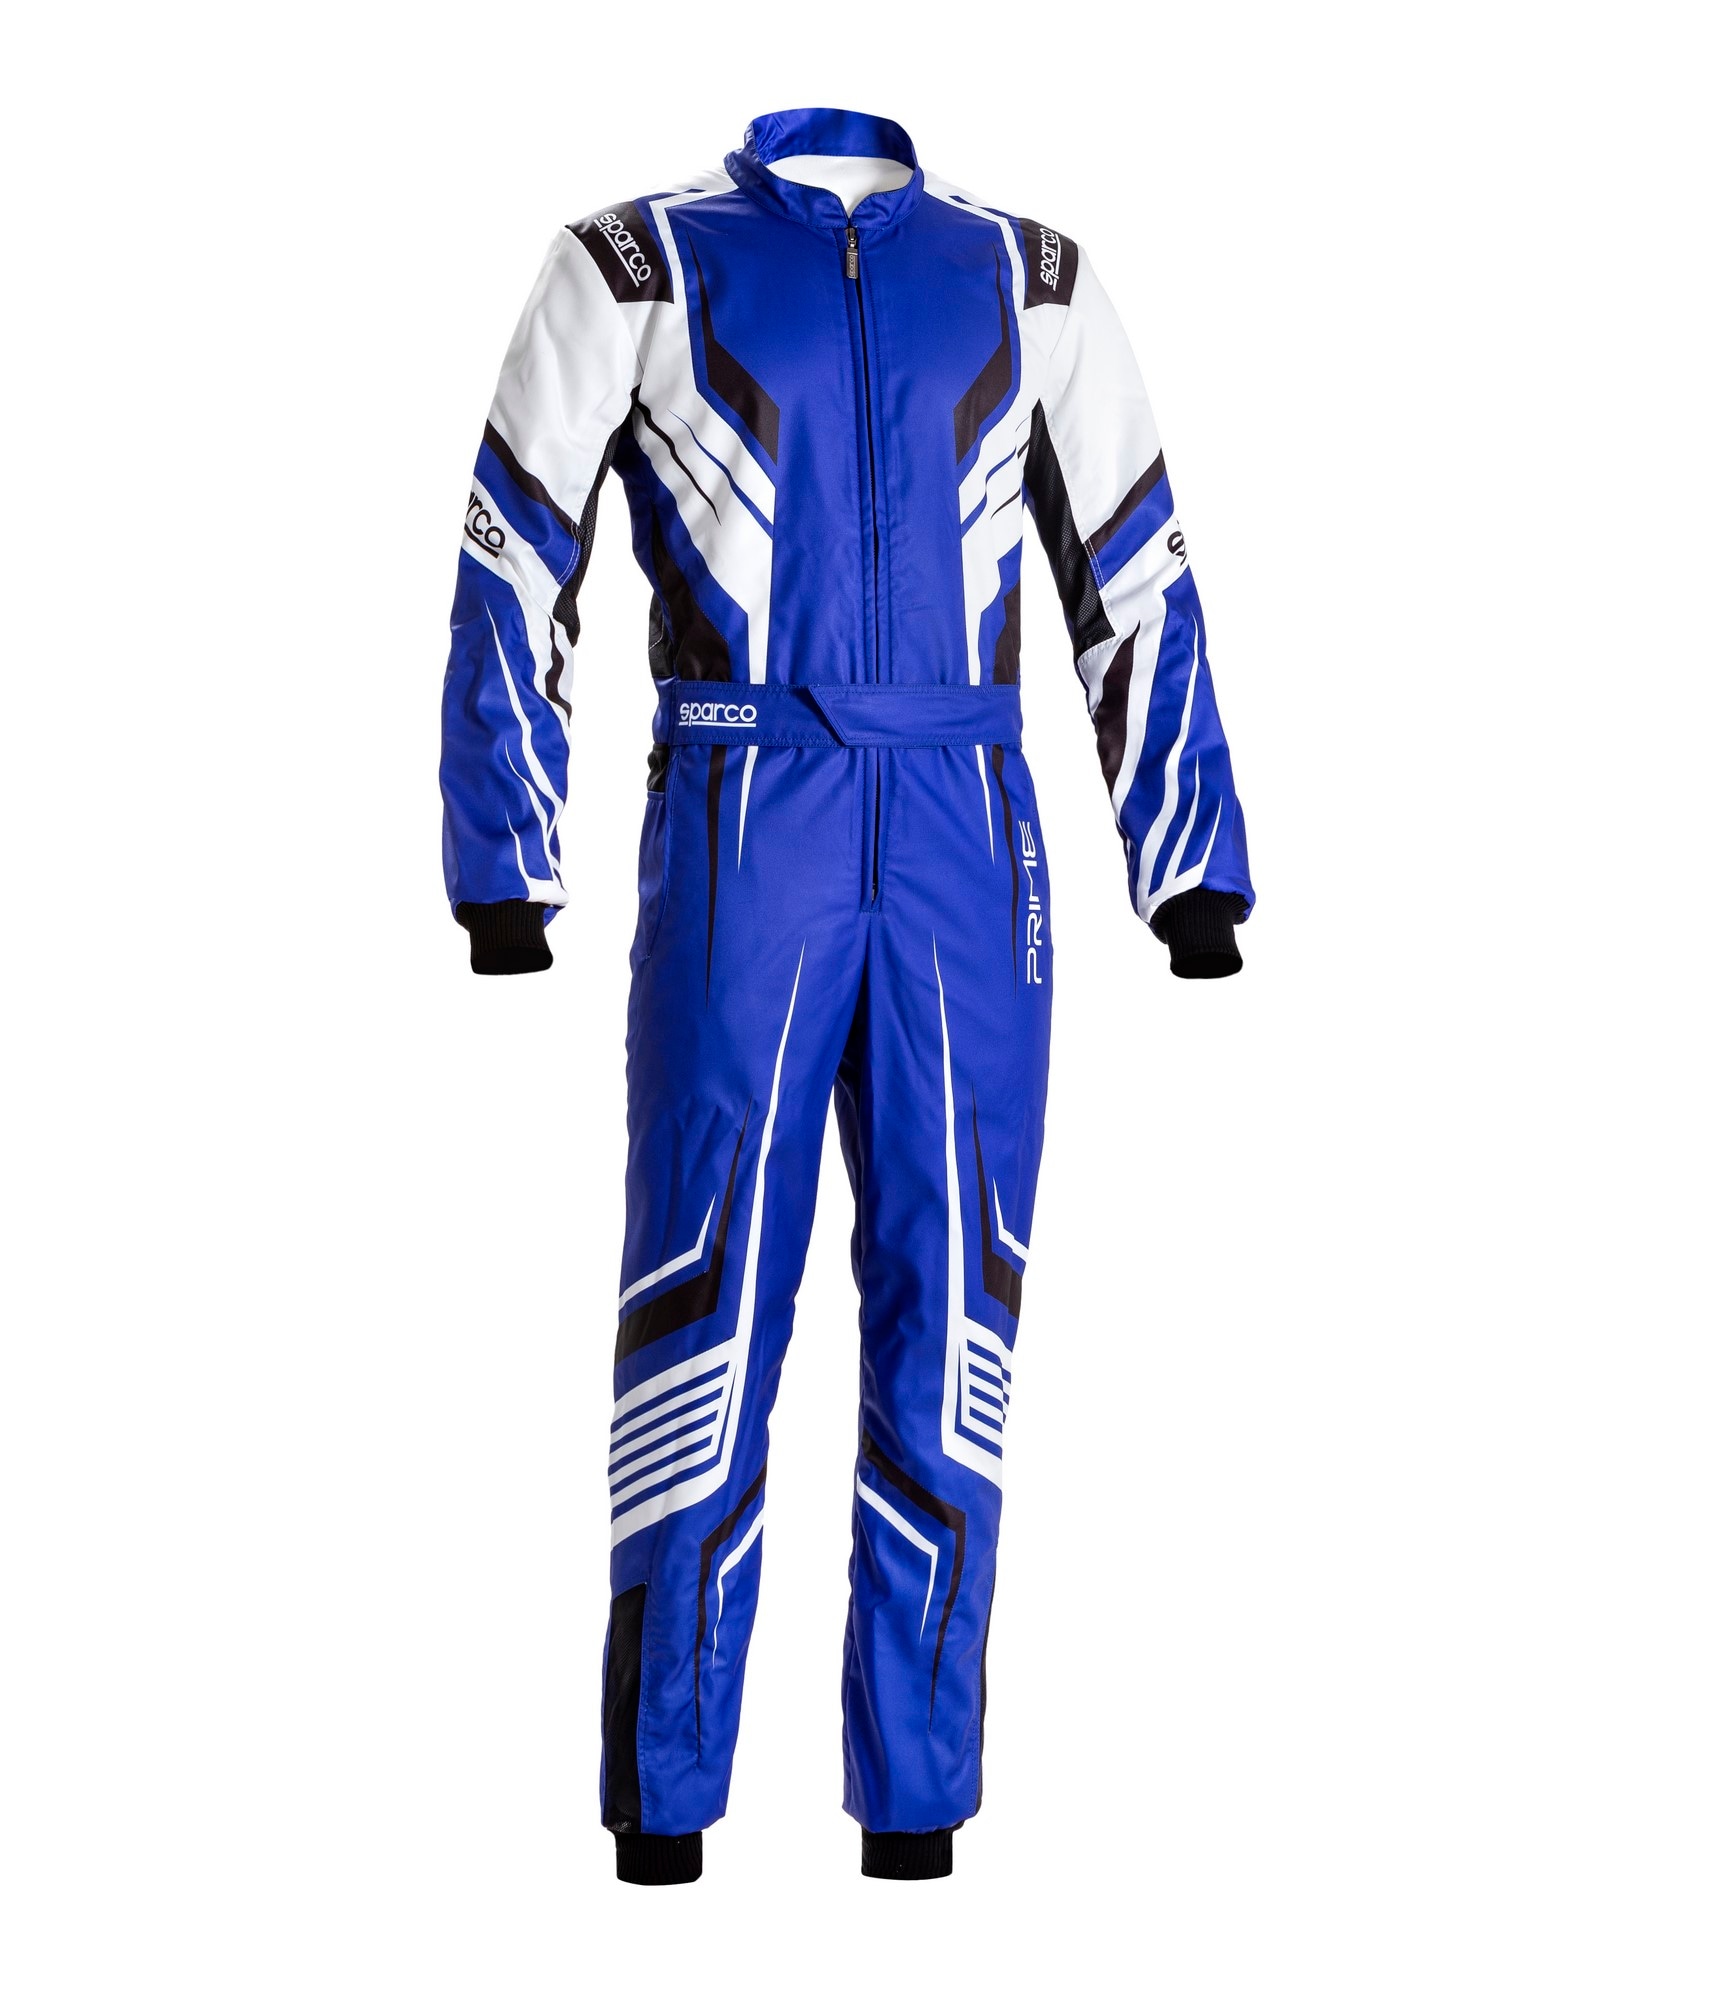 Racing Suit Sparco Prime K Blue/White